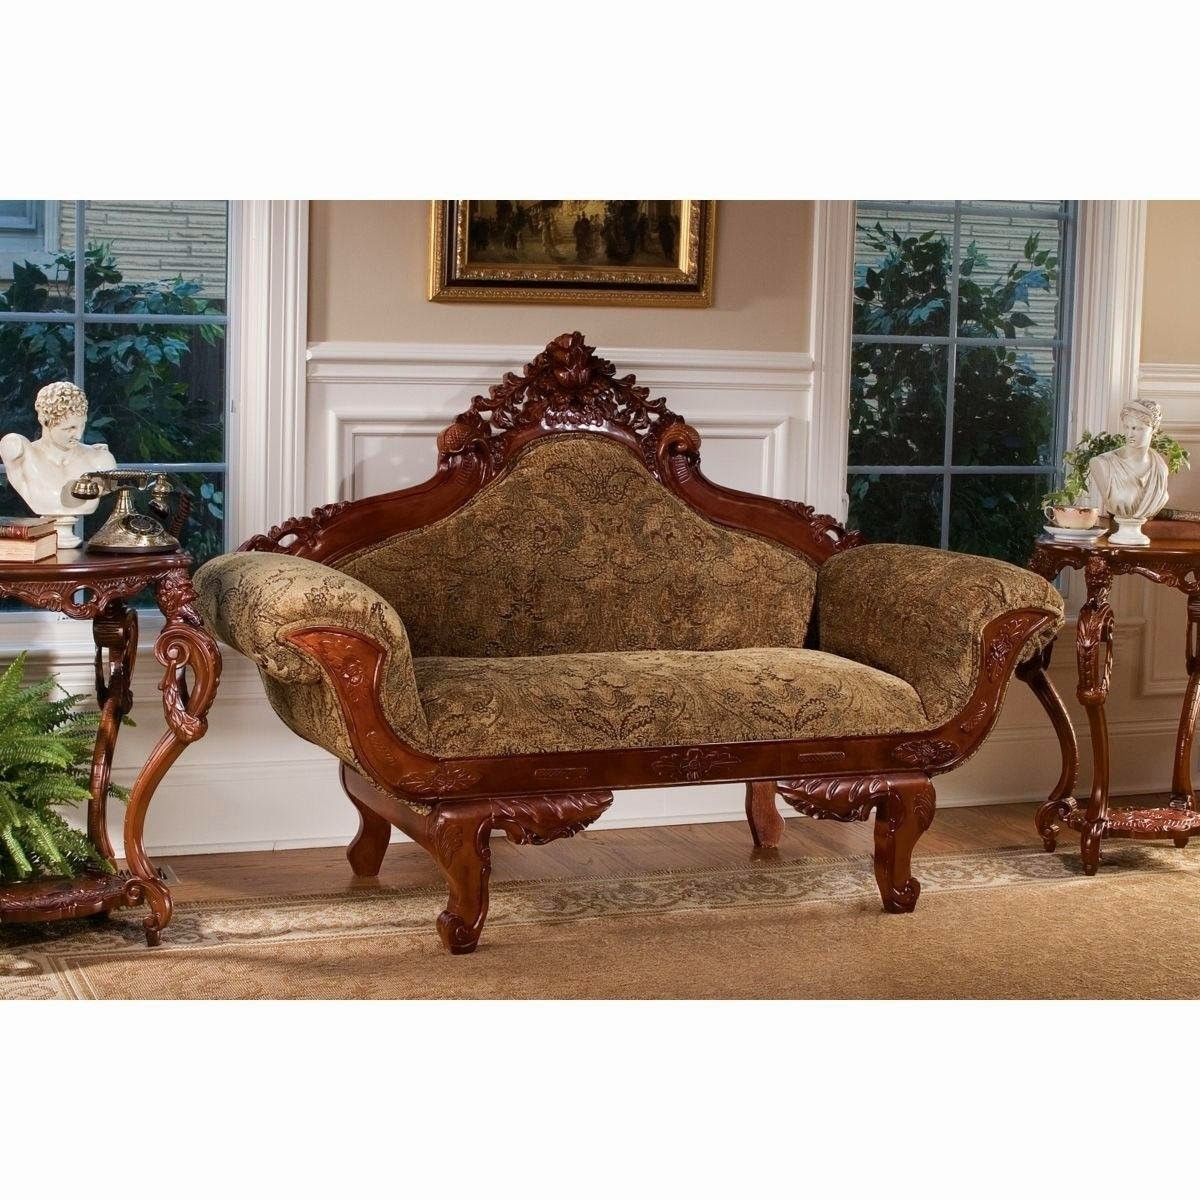 Solid Hardwood Antique Replica Victorian Parlor Loveseat Sofa Settee